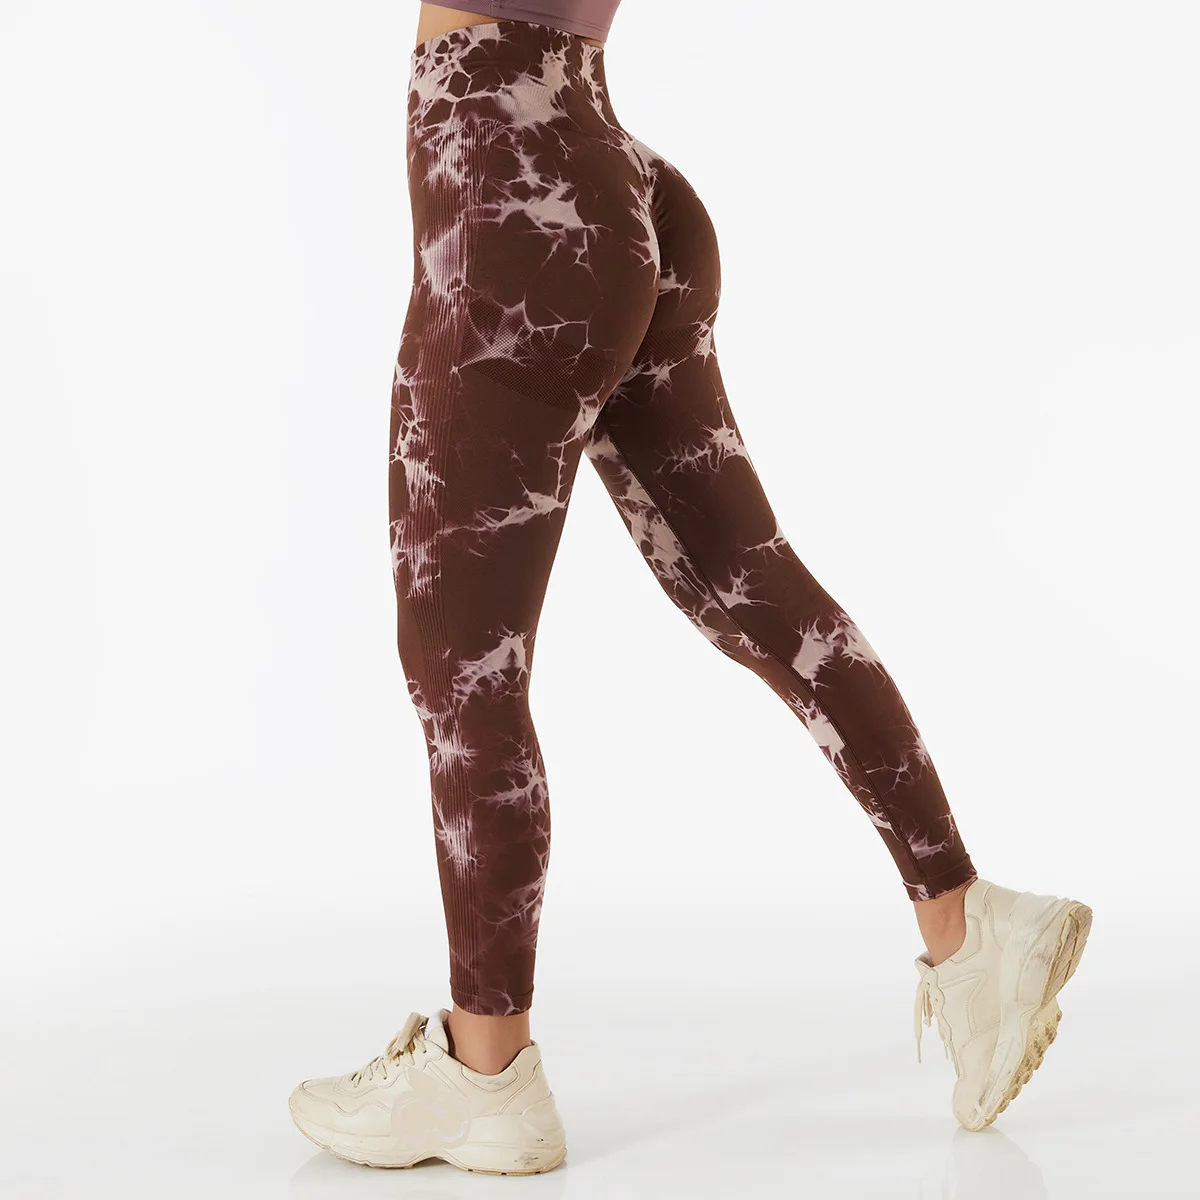 Marbling Tie-dye Yoga Pants Sports Leggings Women Exercise Running